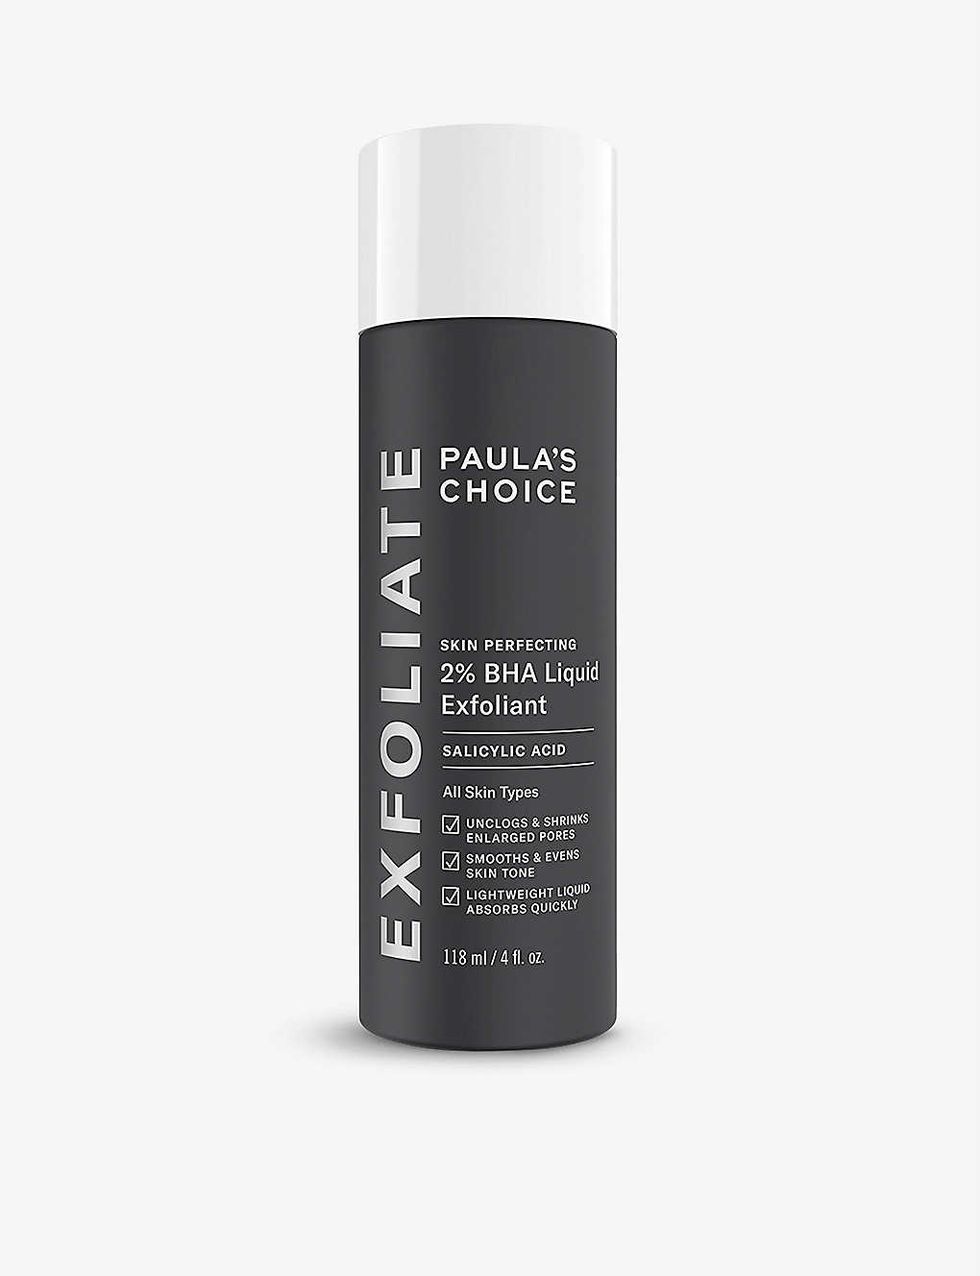 PAULA'S CHOICE Skin Perfecting 2% BHA liquid exfoliant